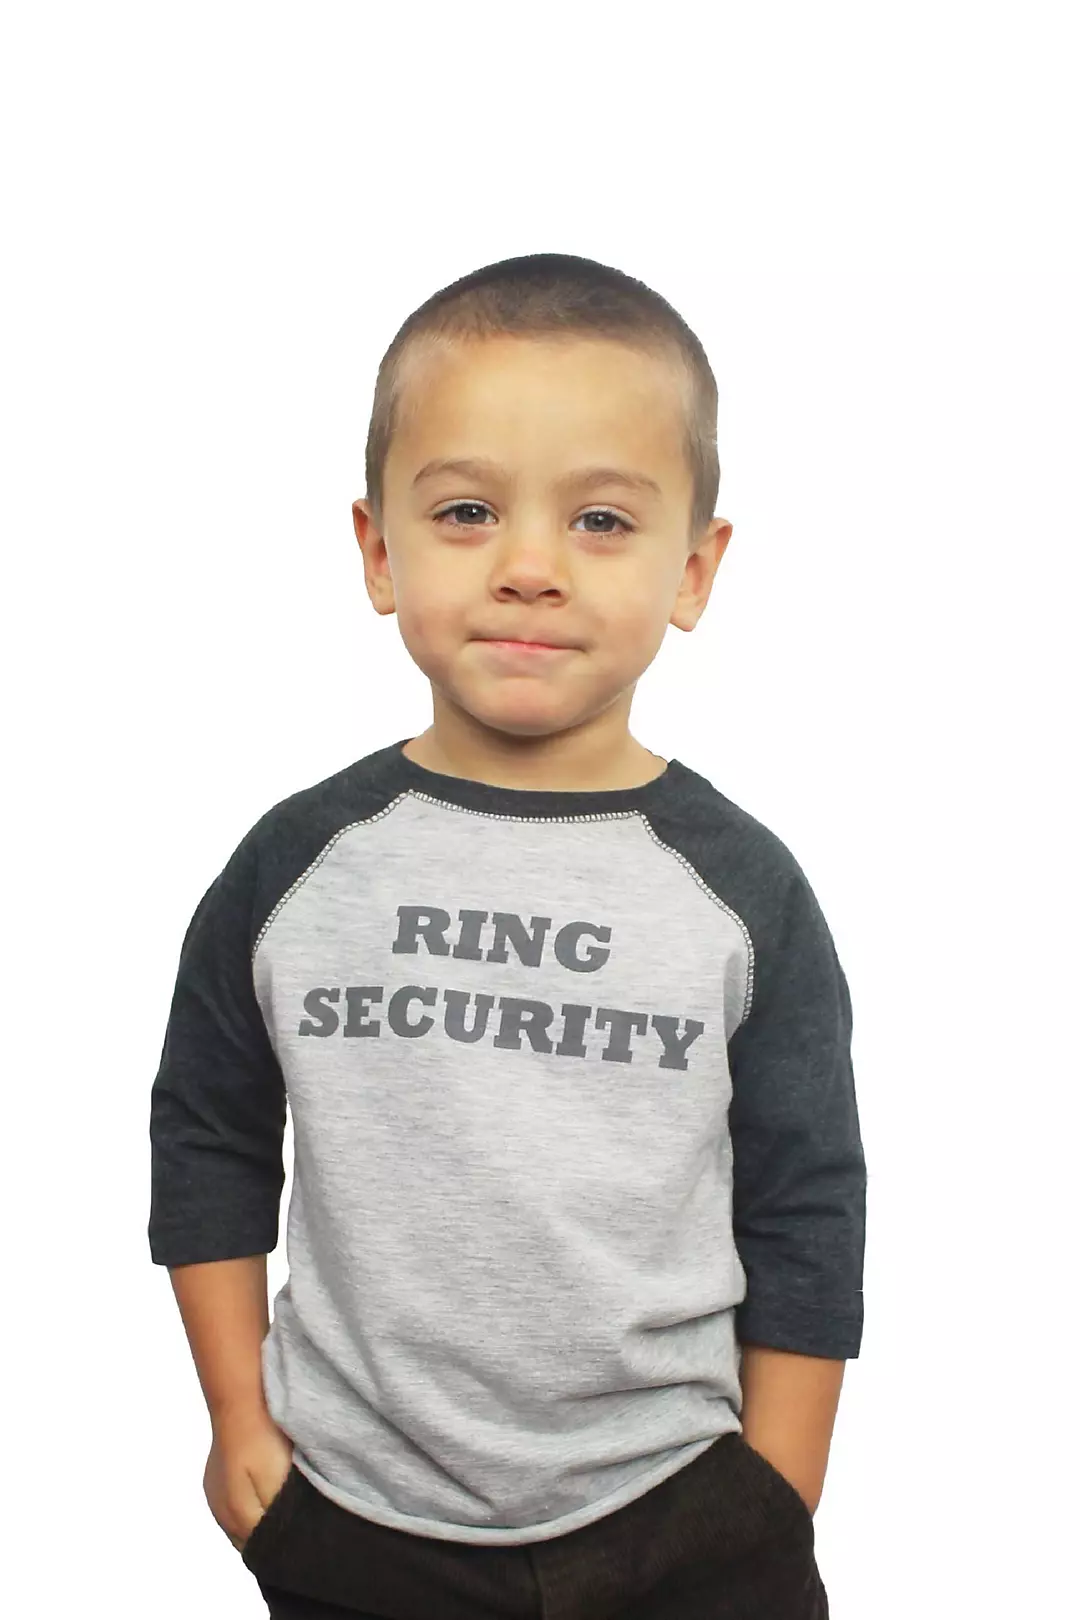 Ring Security Shirt Image